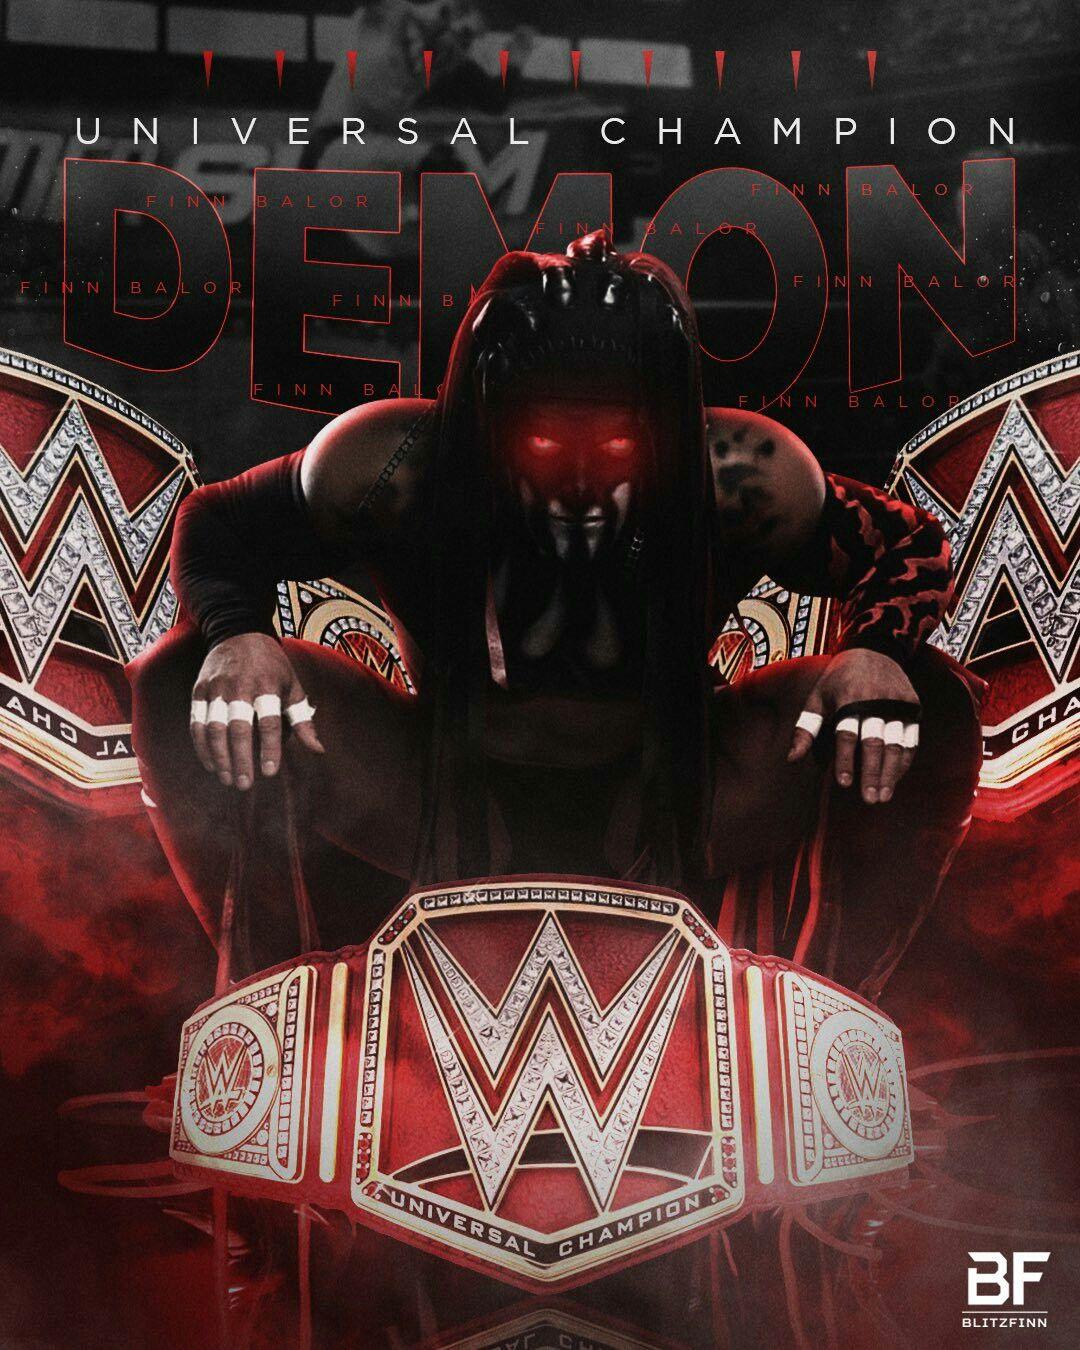 Demon King is first ever WWE Universal Champion. Demon King Finn